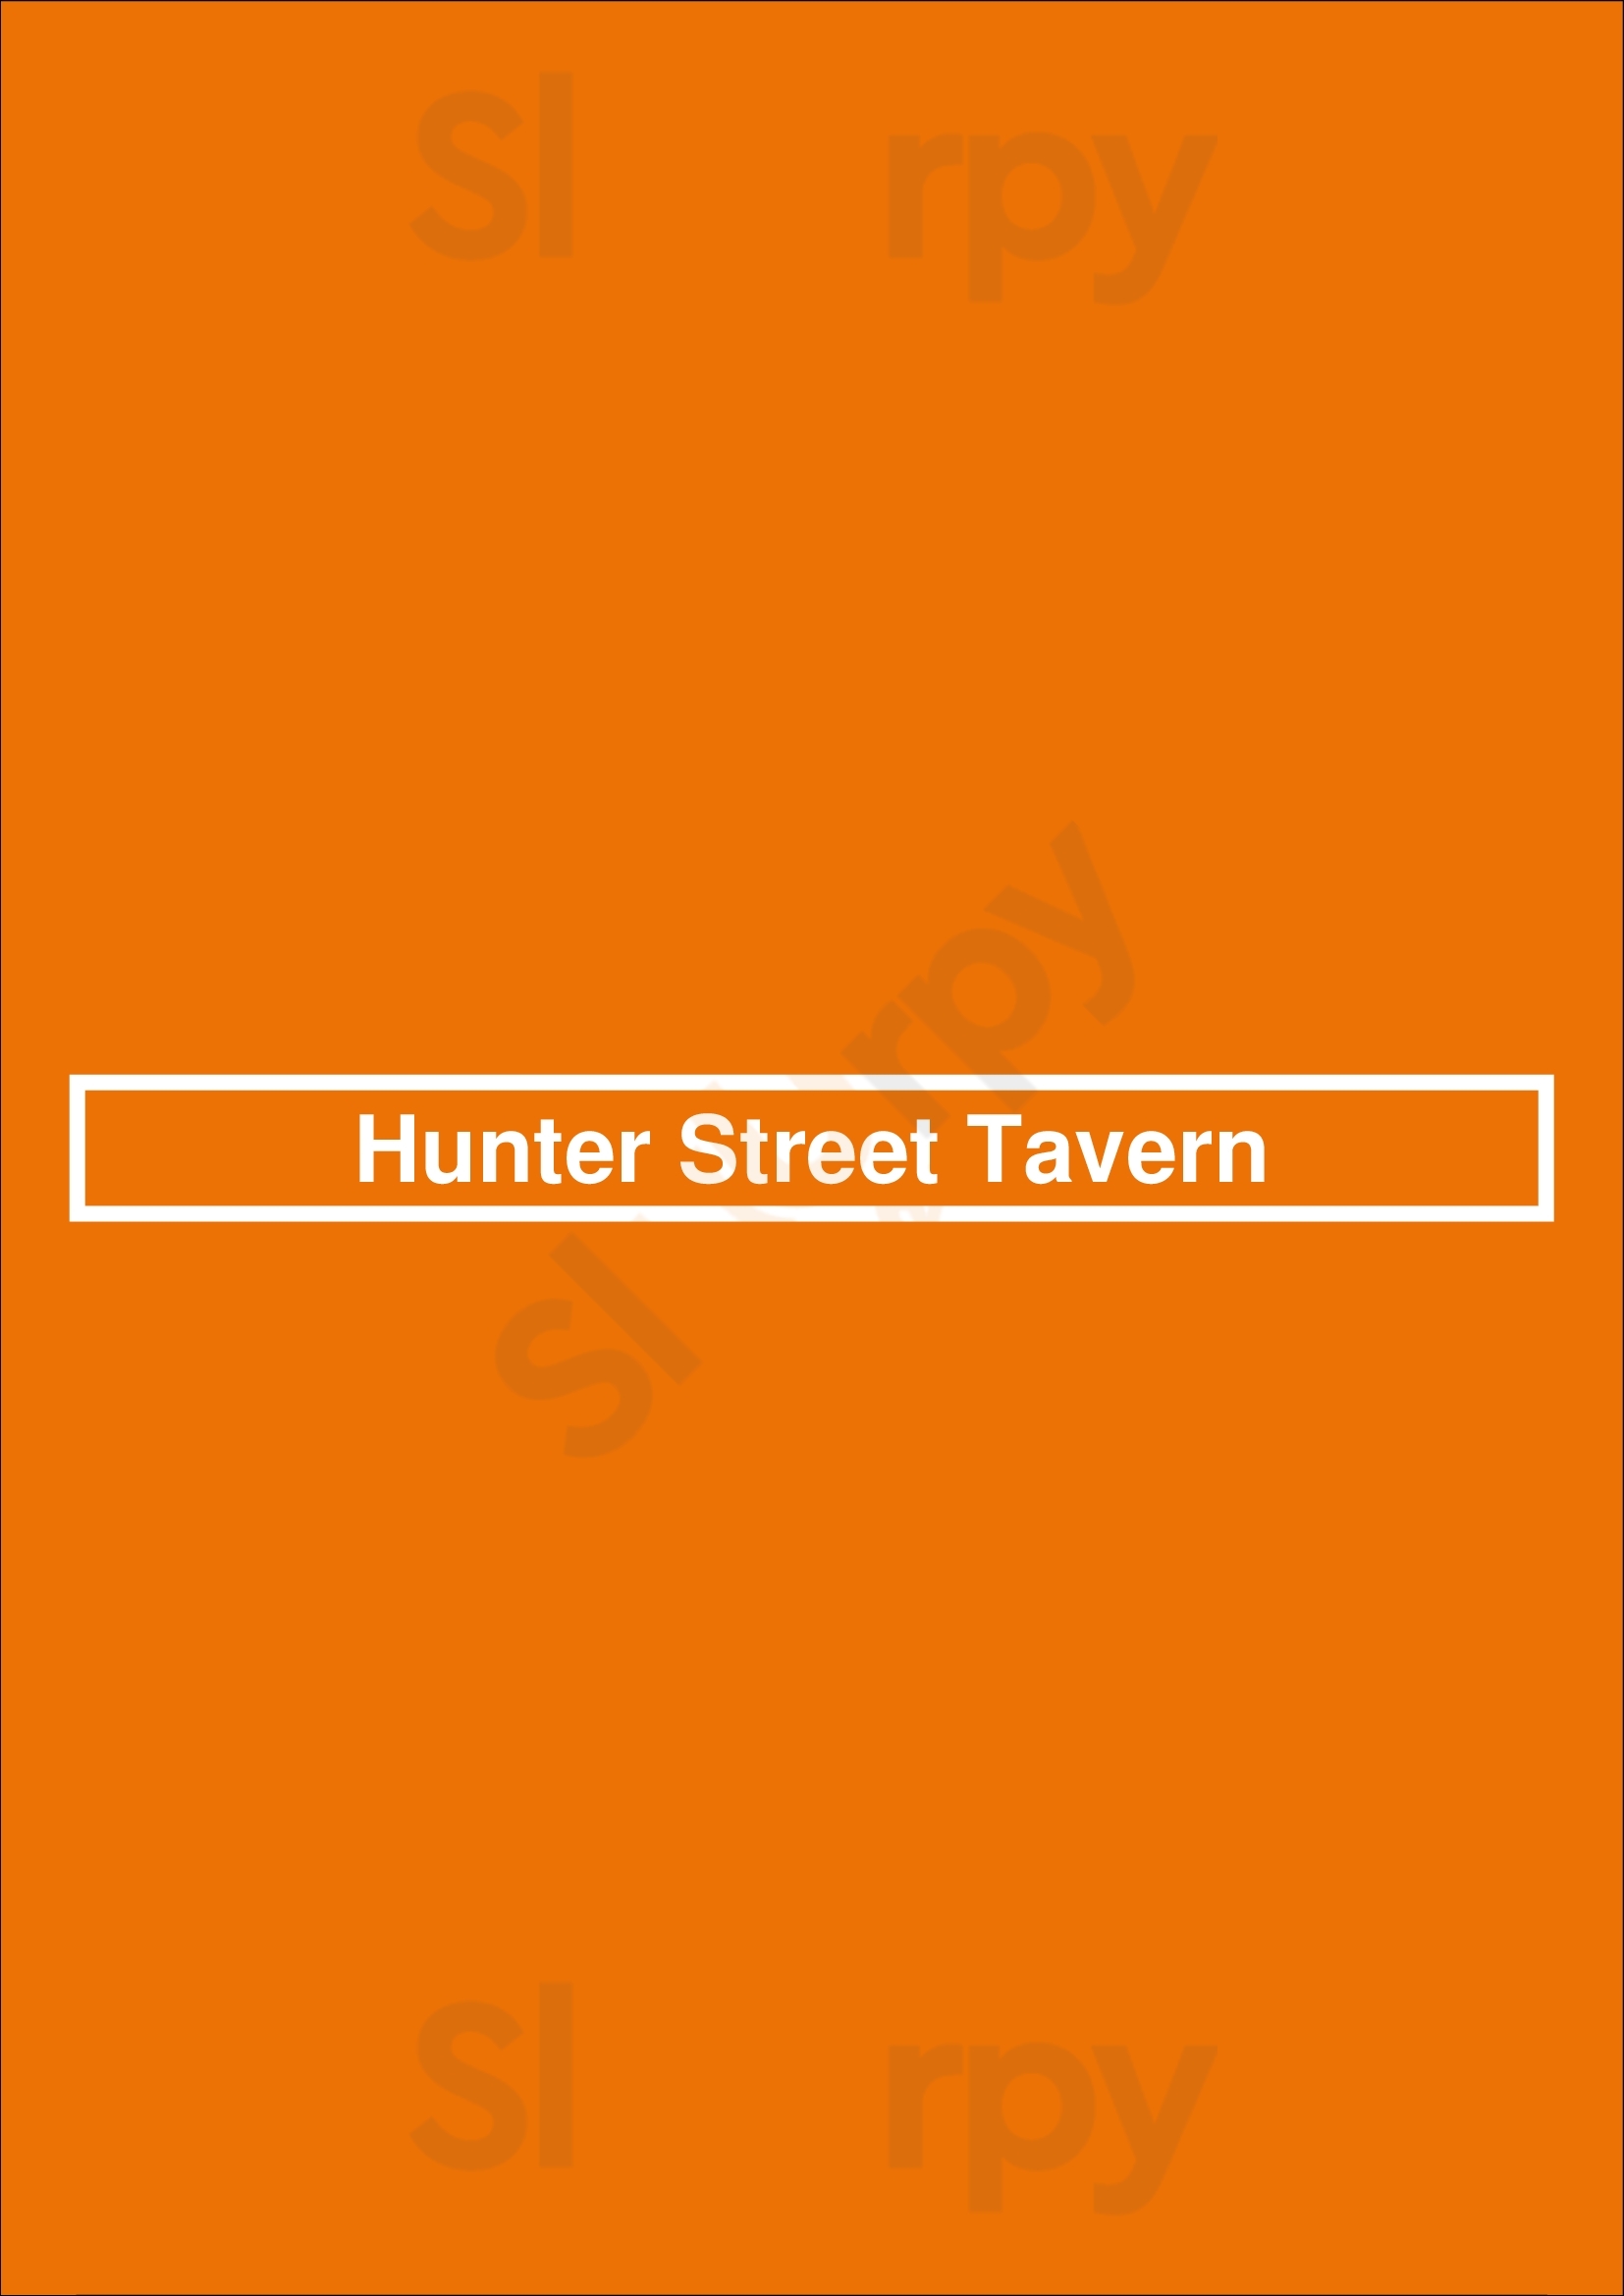 Hunter Street Tavern Peterborough Menu - 1